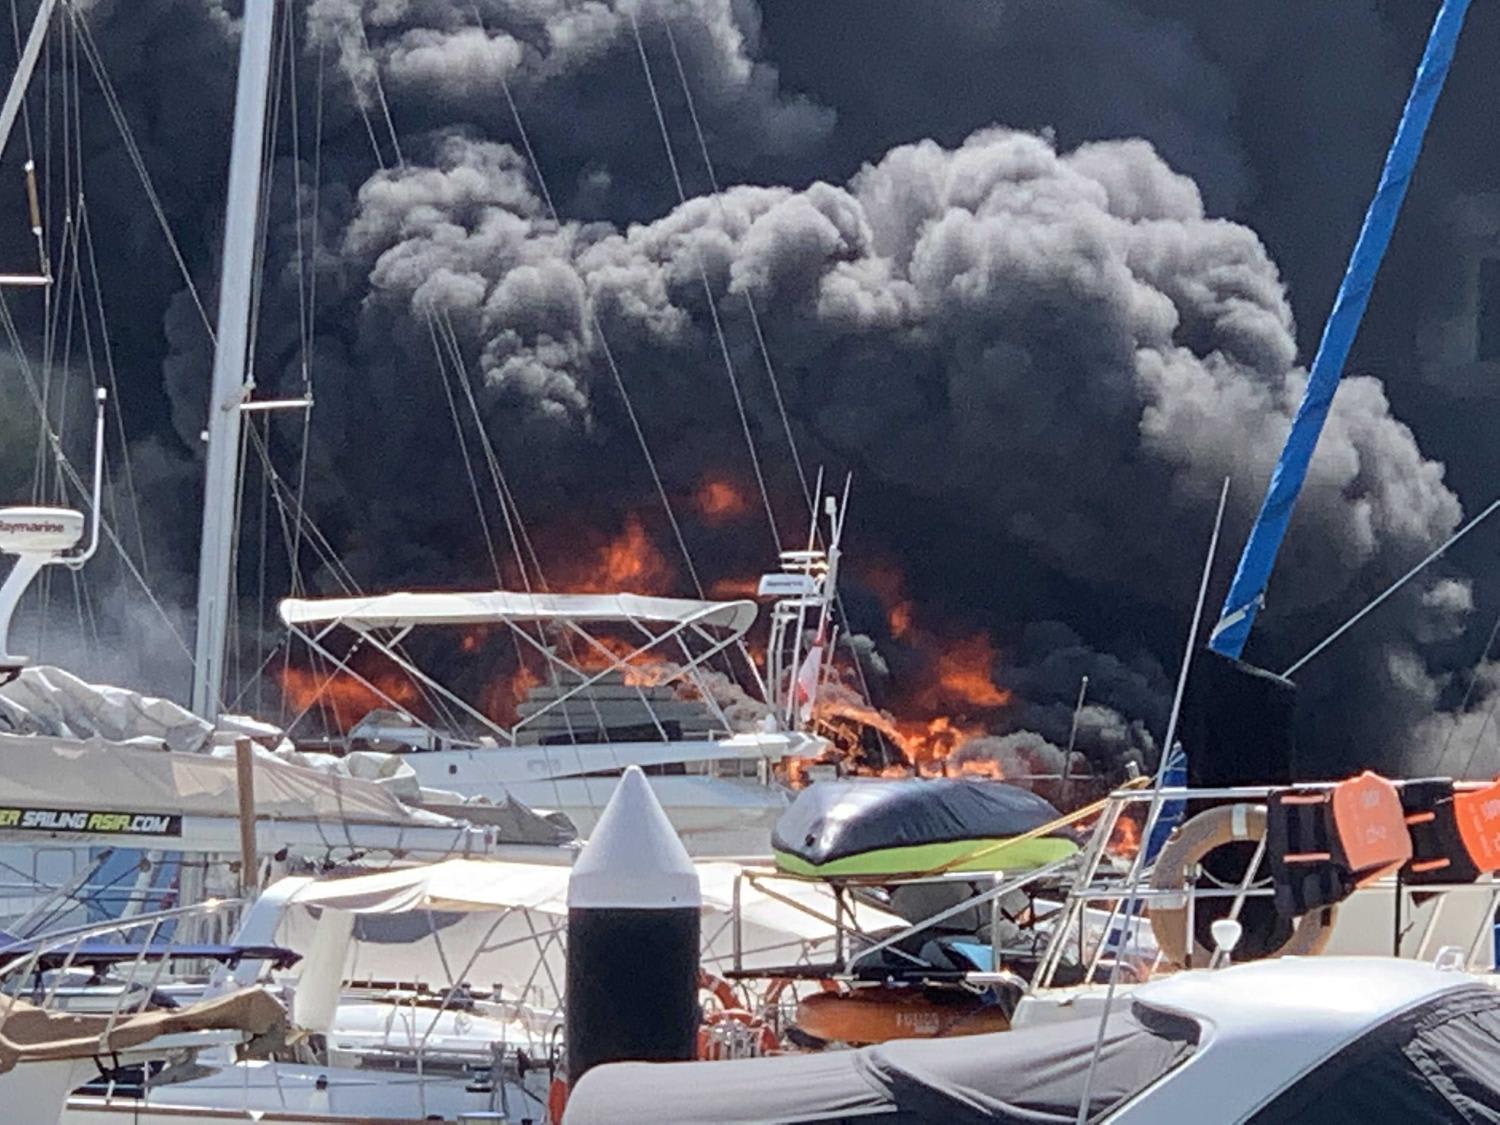 A fire broke out on a boat at Marina at Keppel Bay.